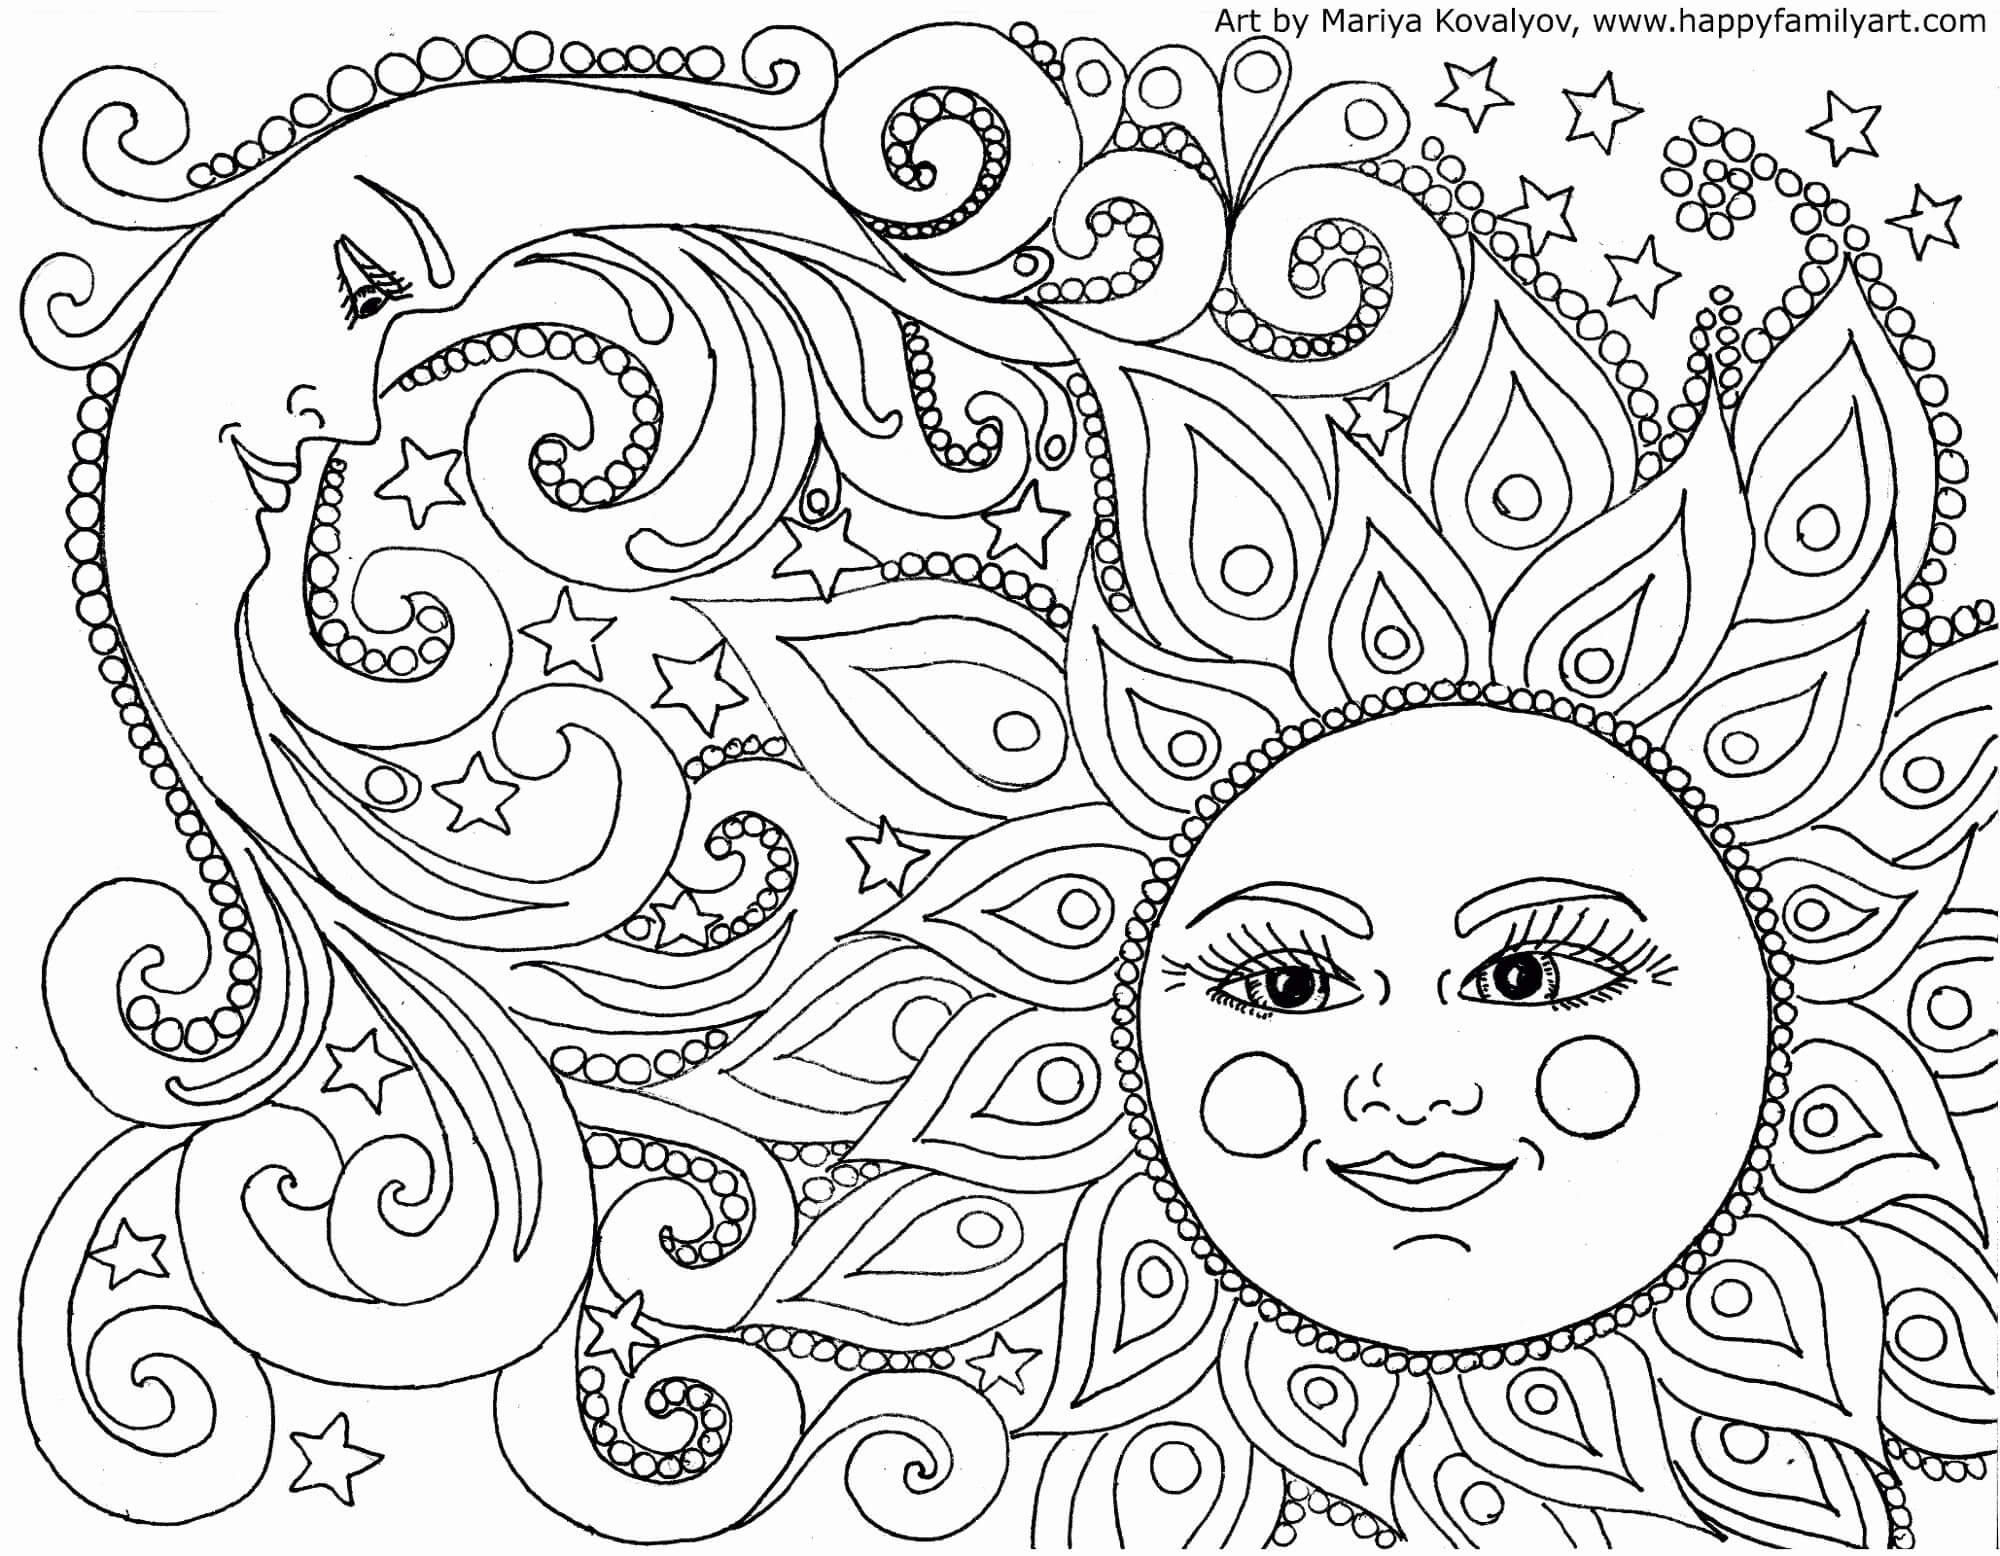 Mandala sol e lua Sorrindo para colorir